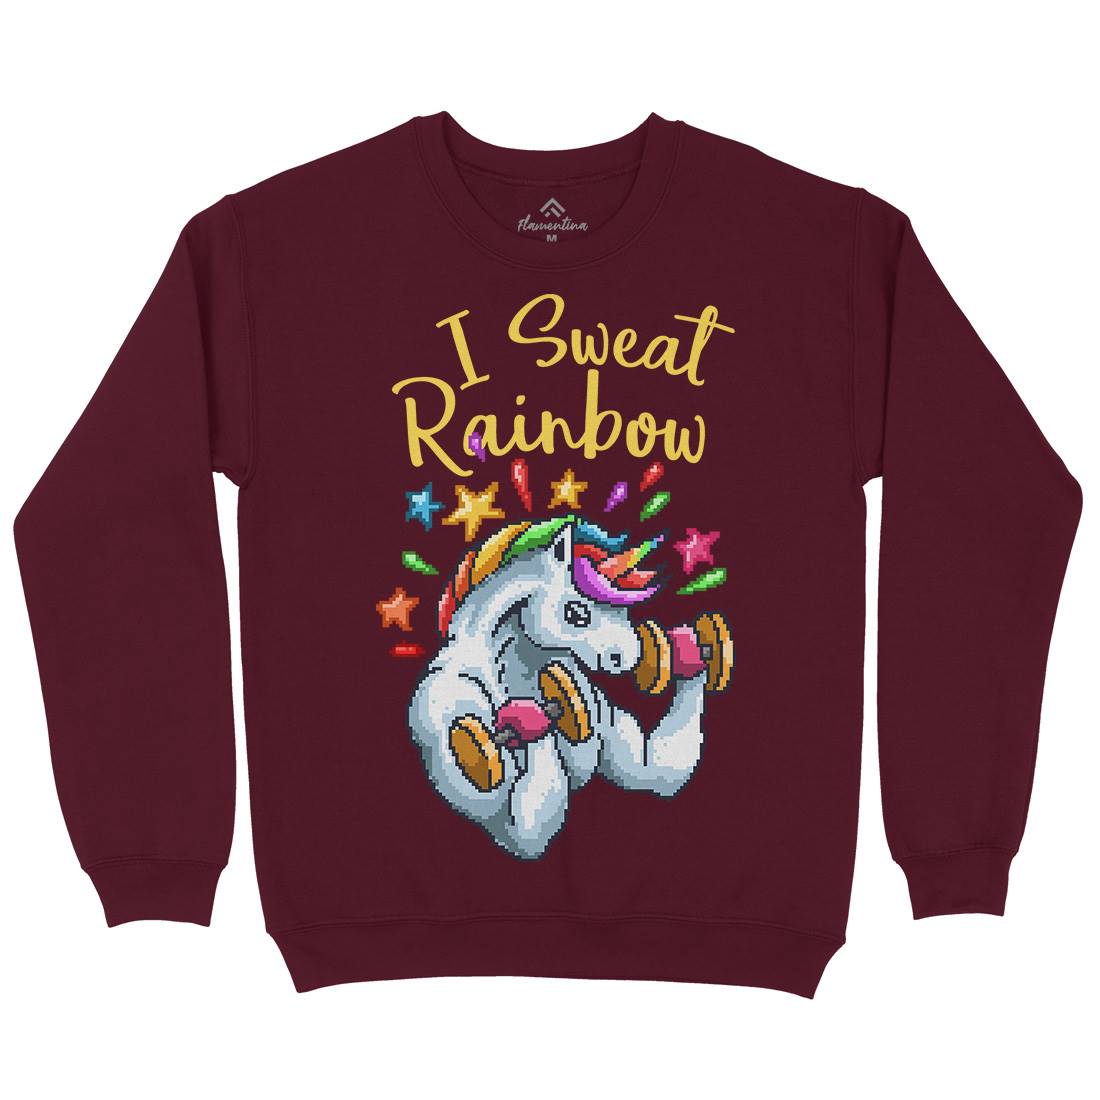 I Sweat Rainbow Kids Crew Neck Sweatshirt Retro B916